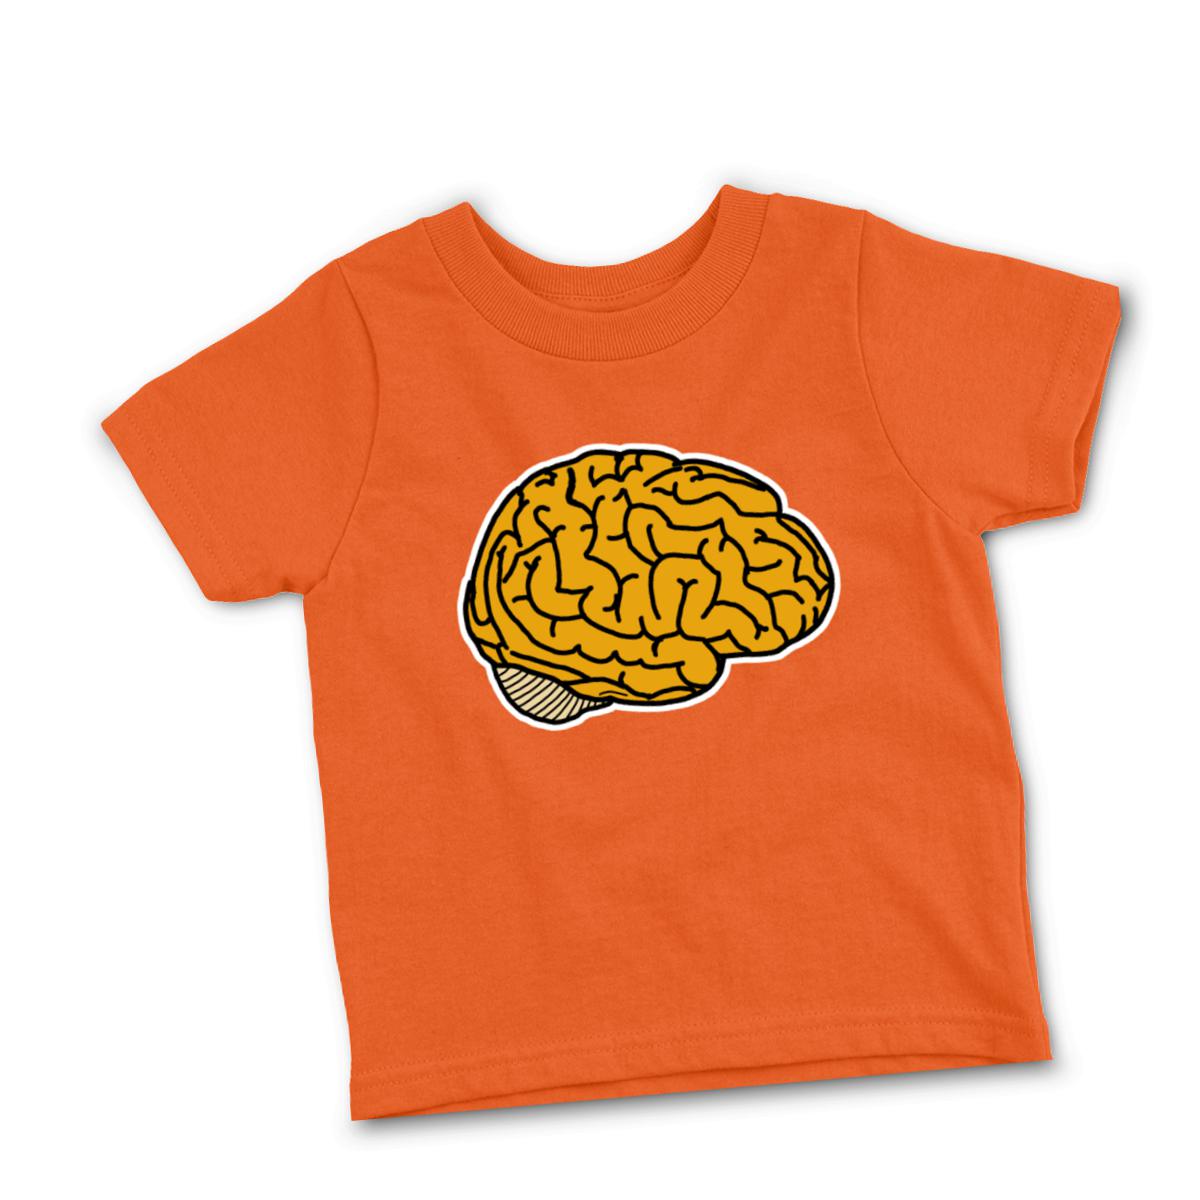 Illustrative Brain Infant Tee 12M orange